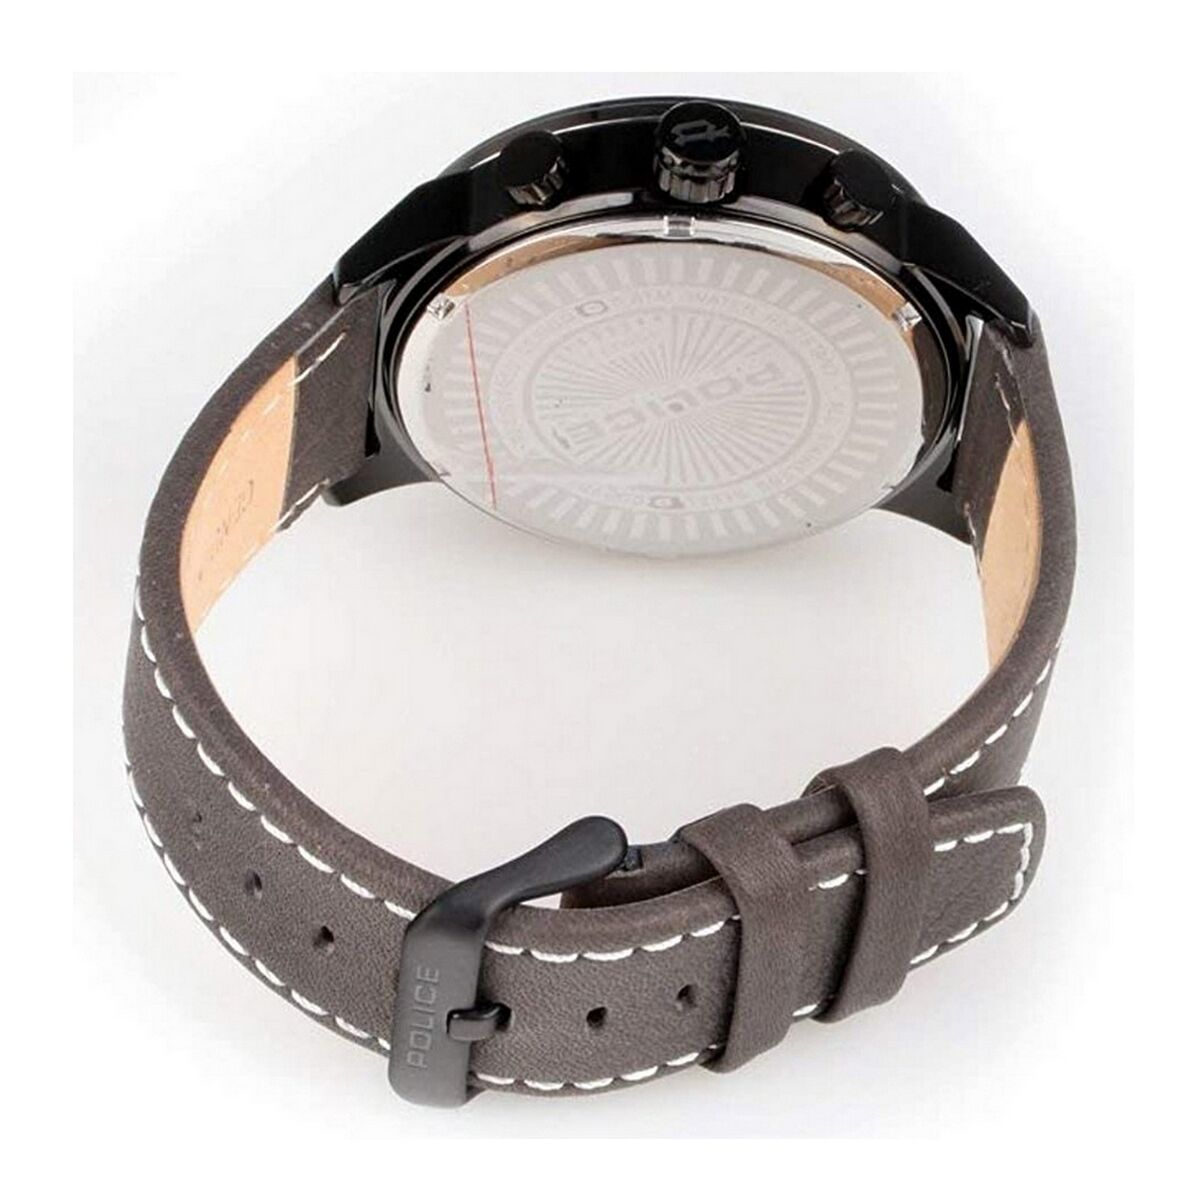 Horloge Heren Police R1451281001 (Ø 46 mm)